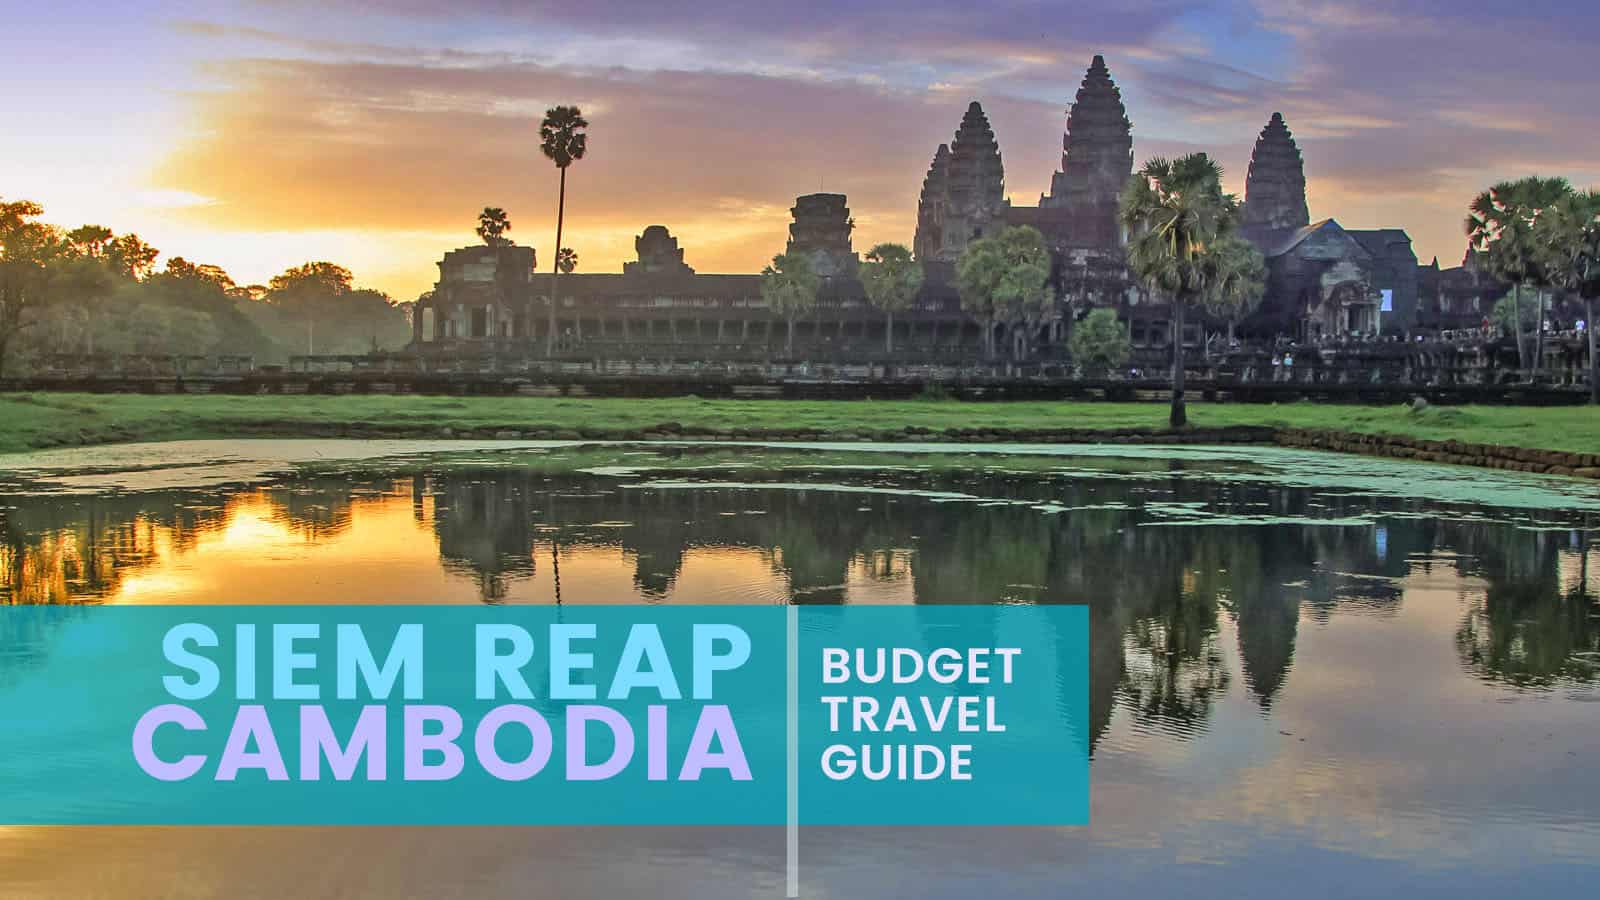 SIEM REAP, CAMBODIA: Budget Travel Guide